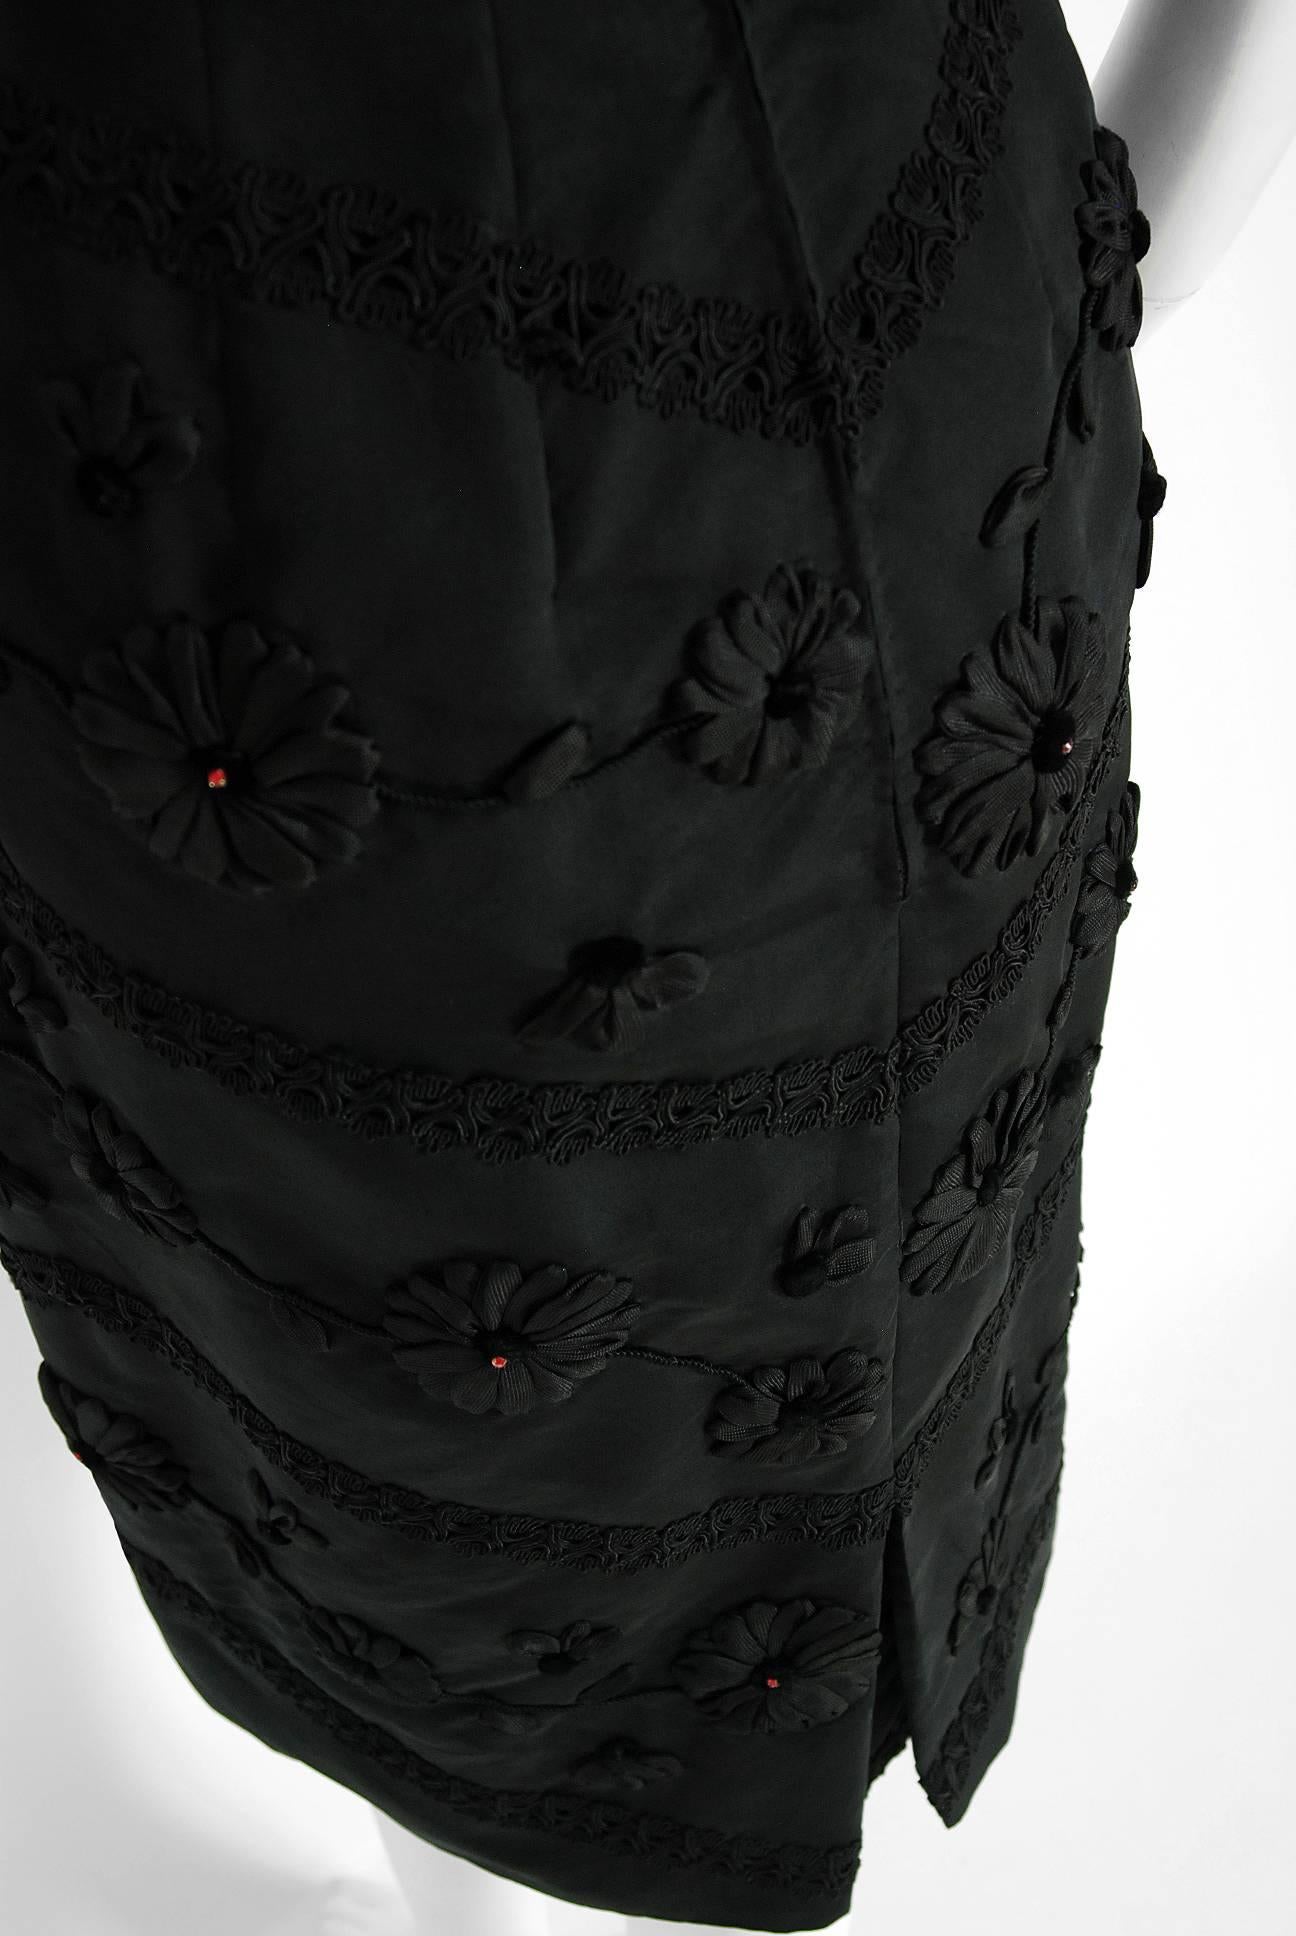 Women's Vintage 1950's Antonelli Italian Couture Black Embroidered Applique Silk Dress